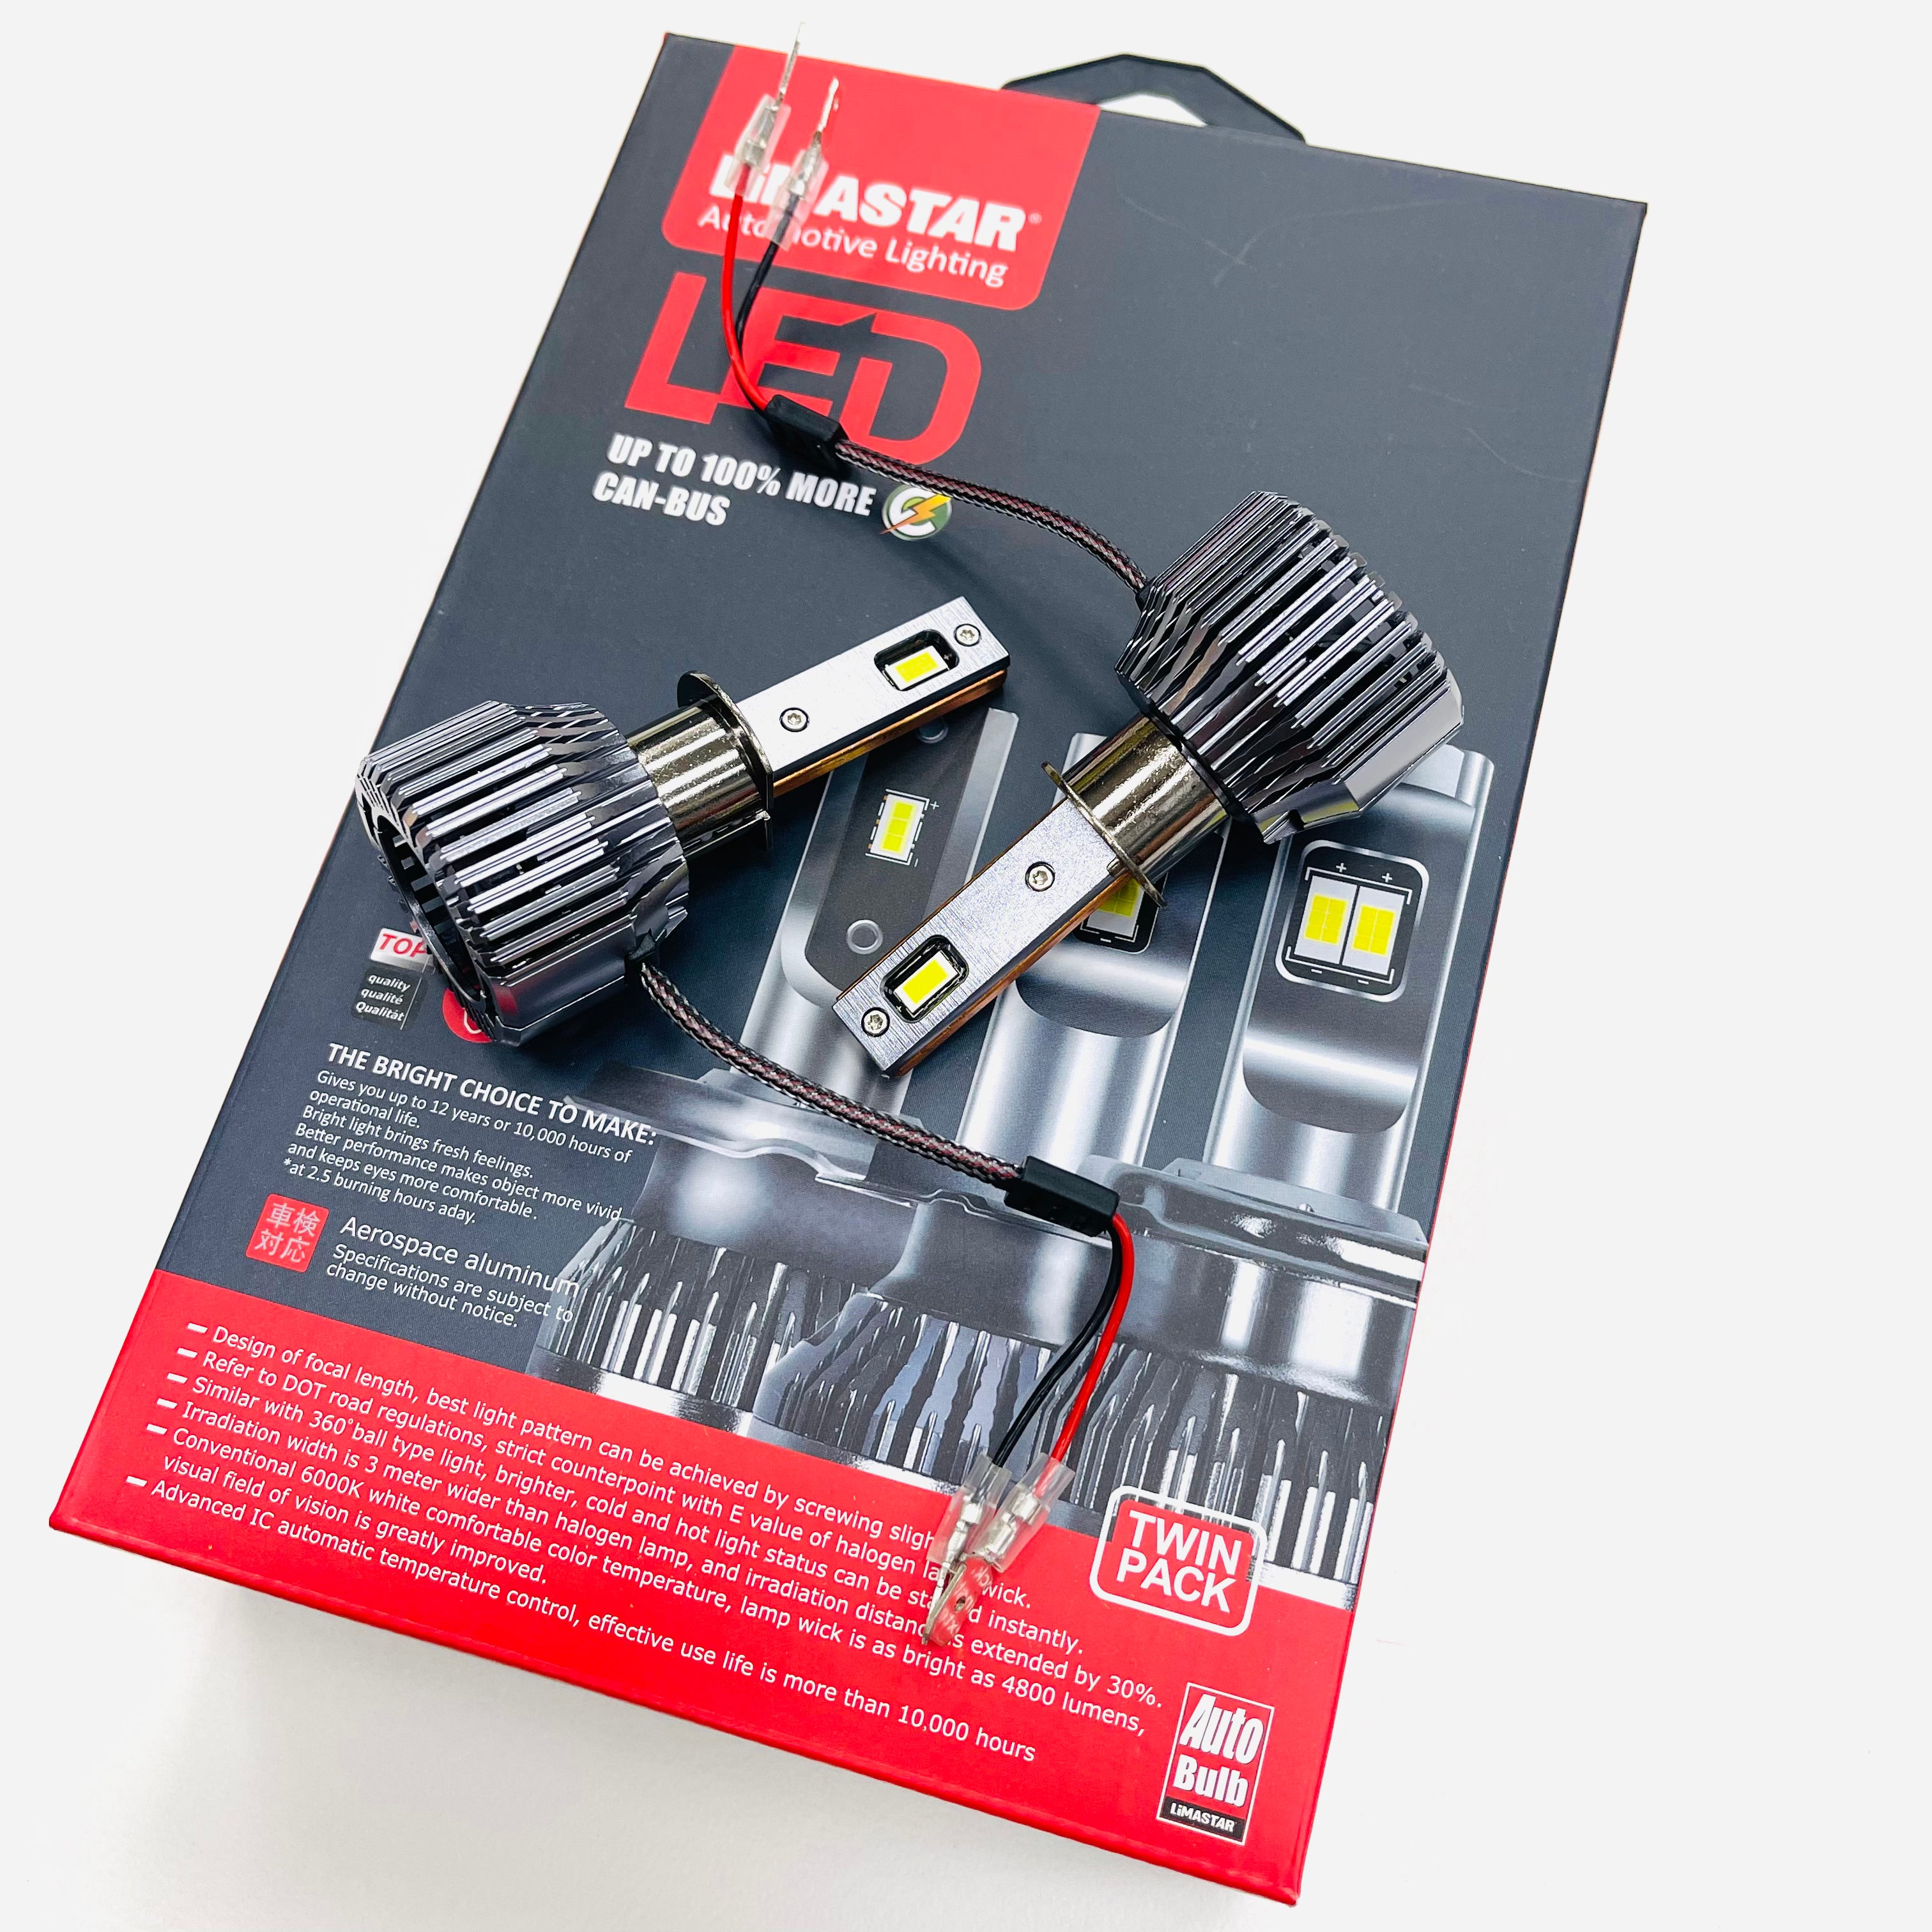 H1 Limastar LED Headlight Bulbs Canbus 55w 6500k Osram – Travelin-Lite